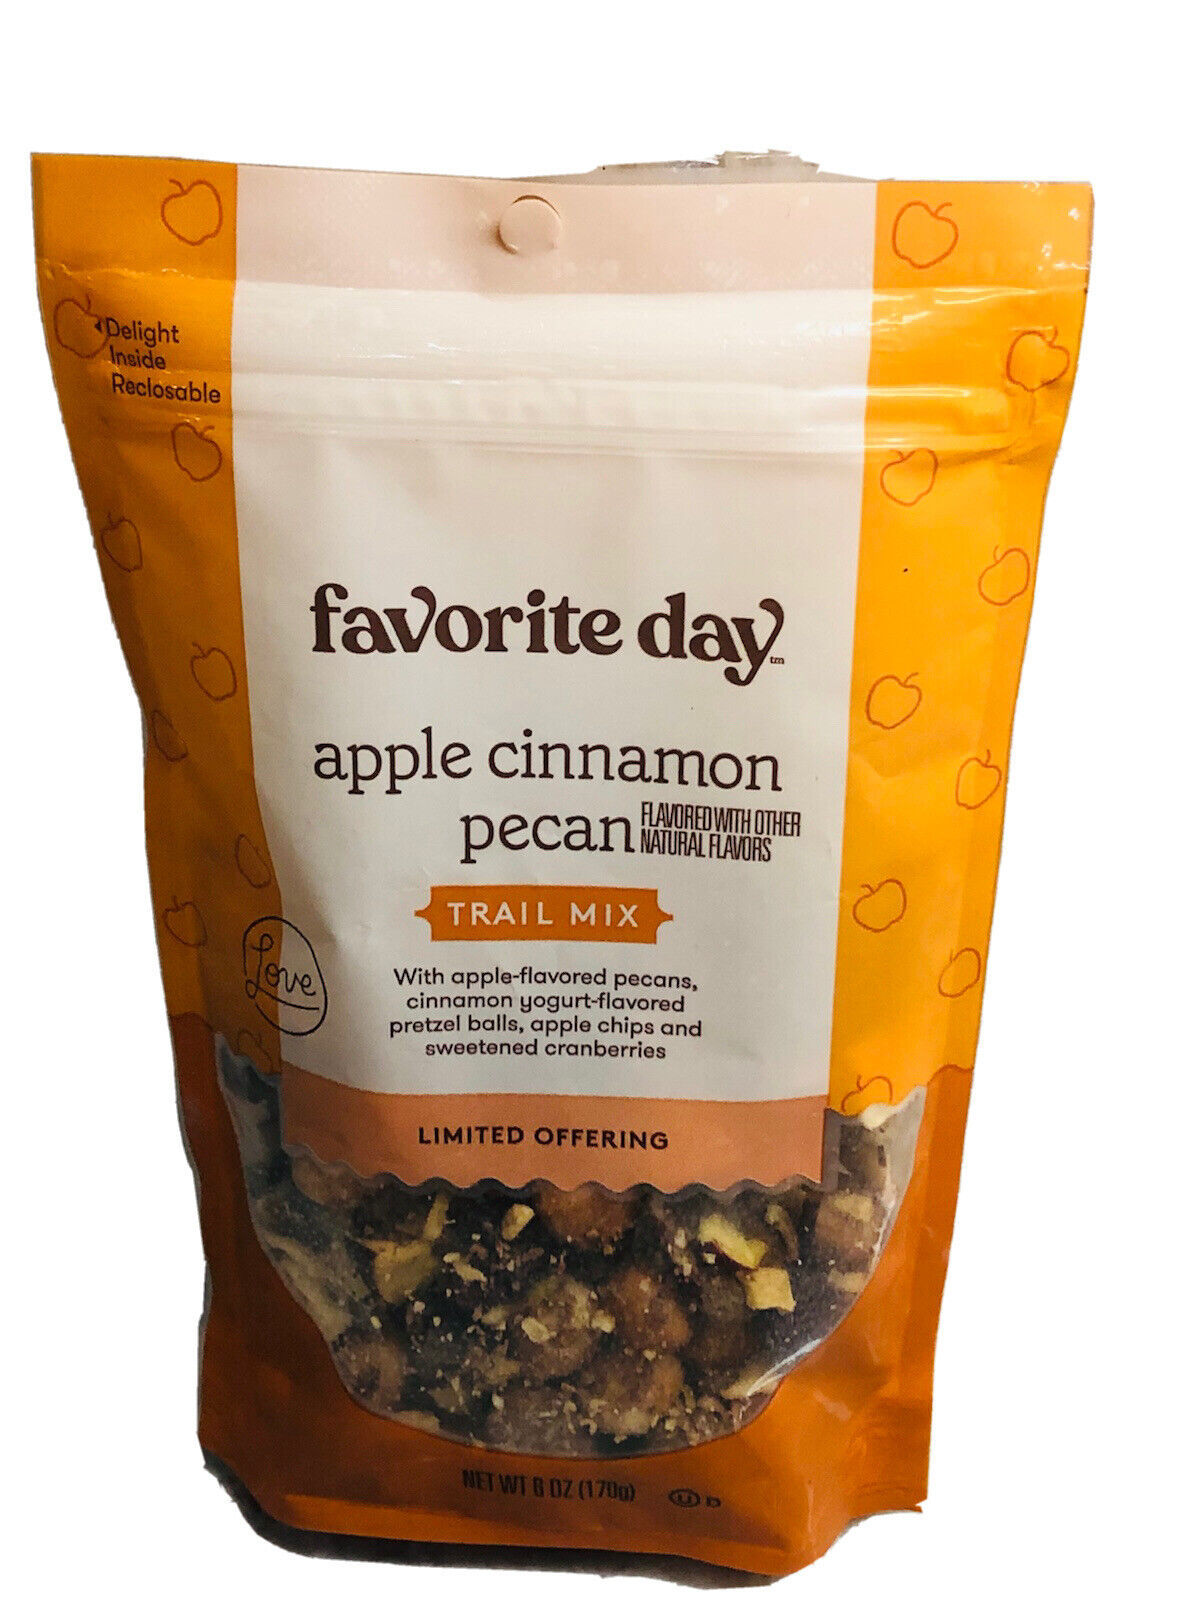 New-Target Apple Cinnamon Pecan Trail Mix 6 0z. Ship N 24 Hours - $18.80